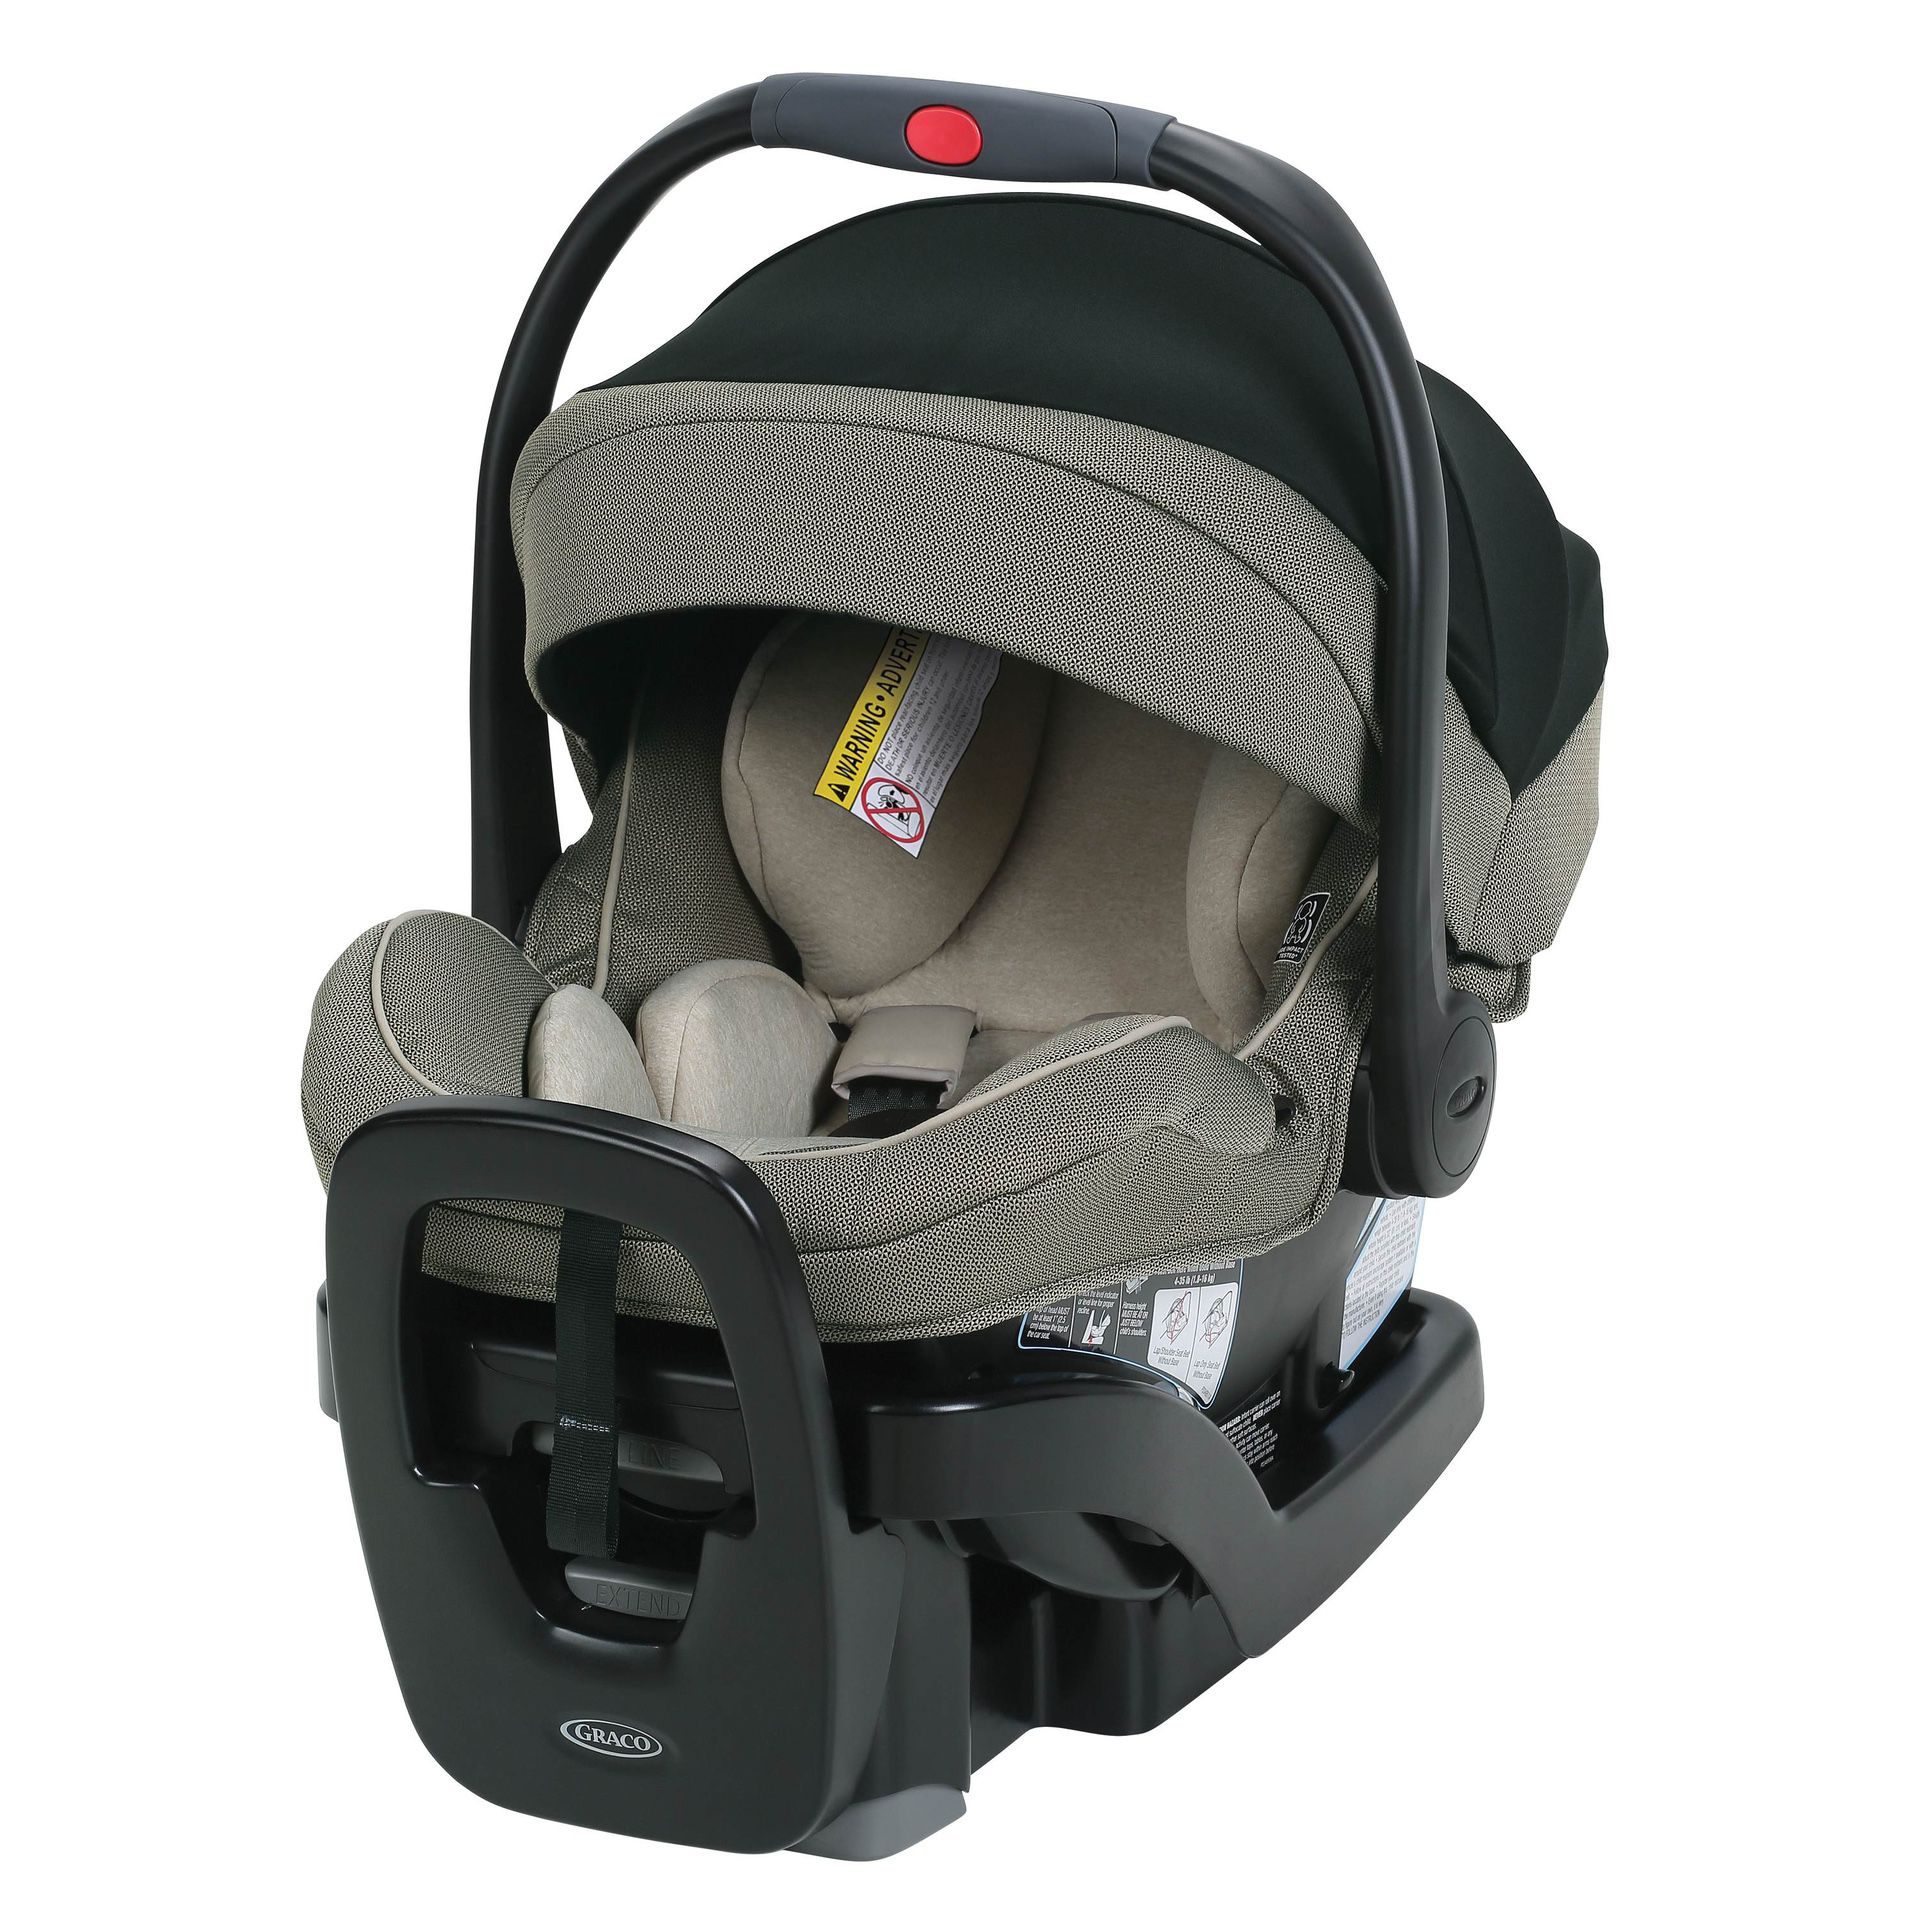 Graco SnugRide SnugLock Extend2Fit 35 Infant Car Seat, Haven Tan - BRAND NEW